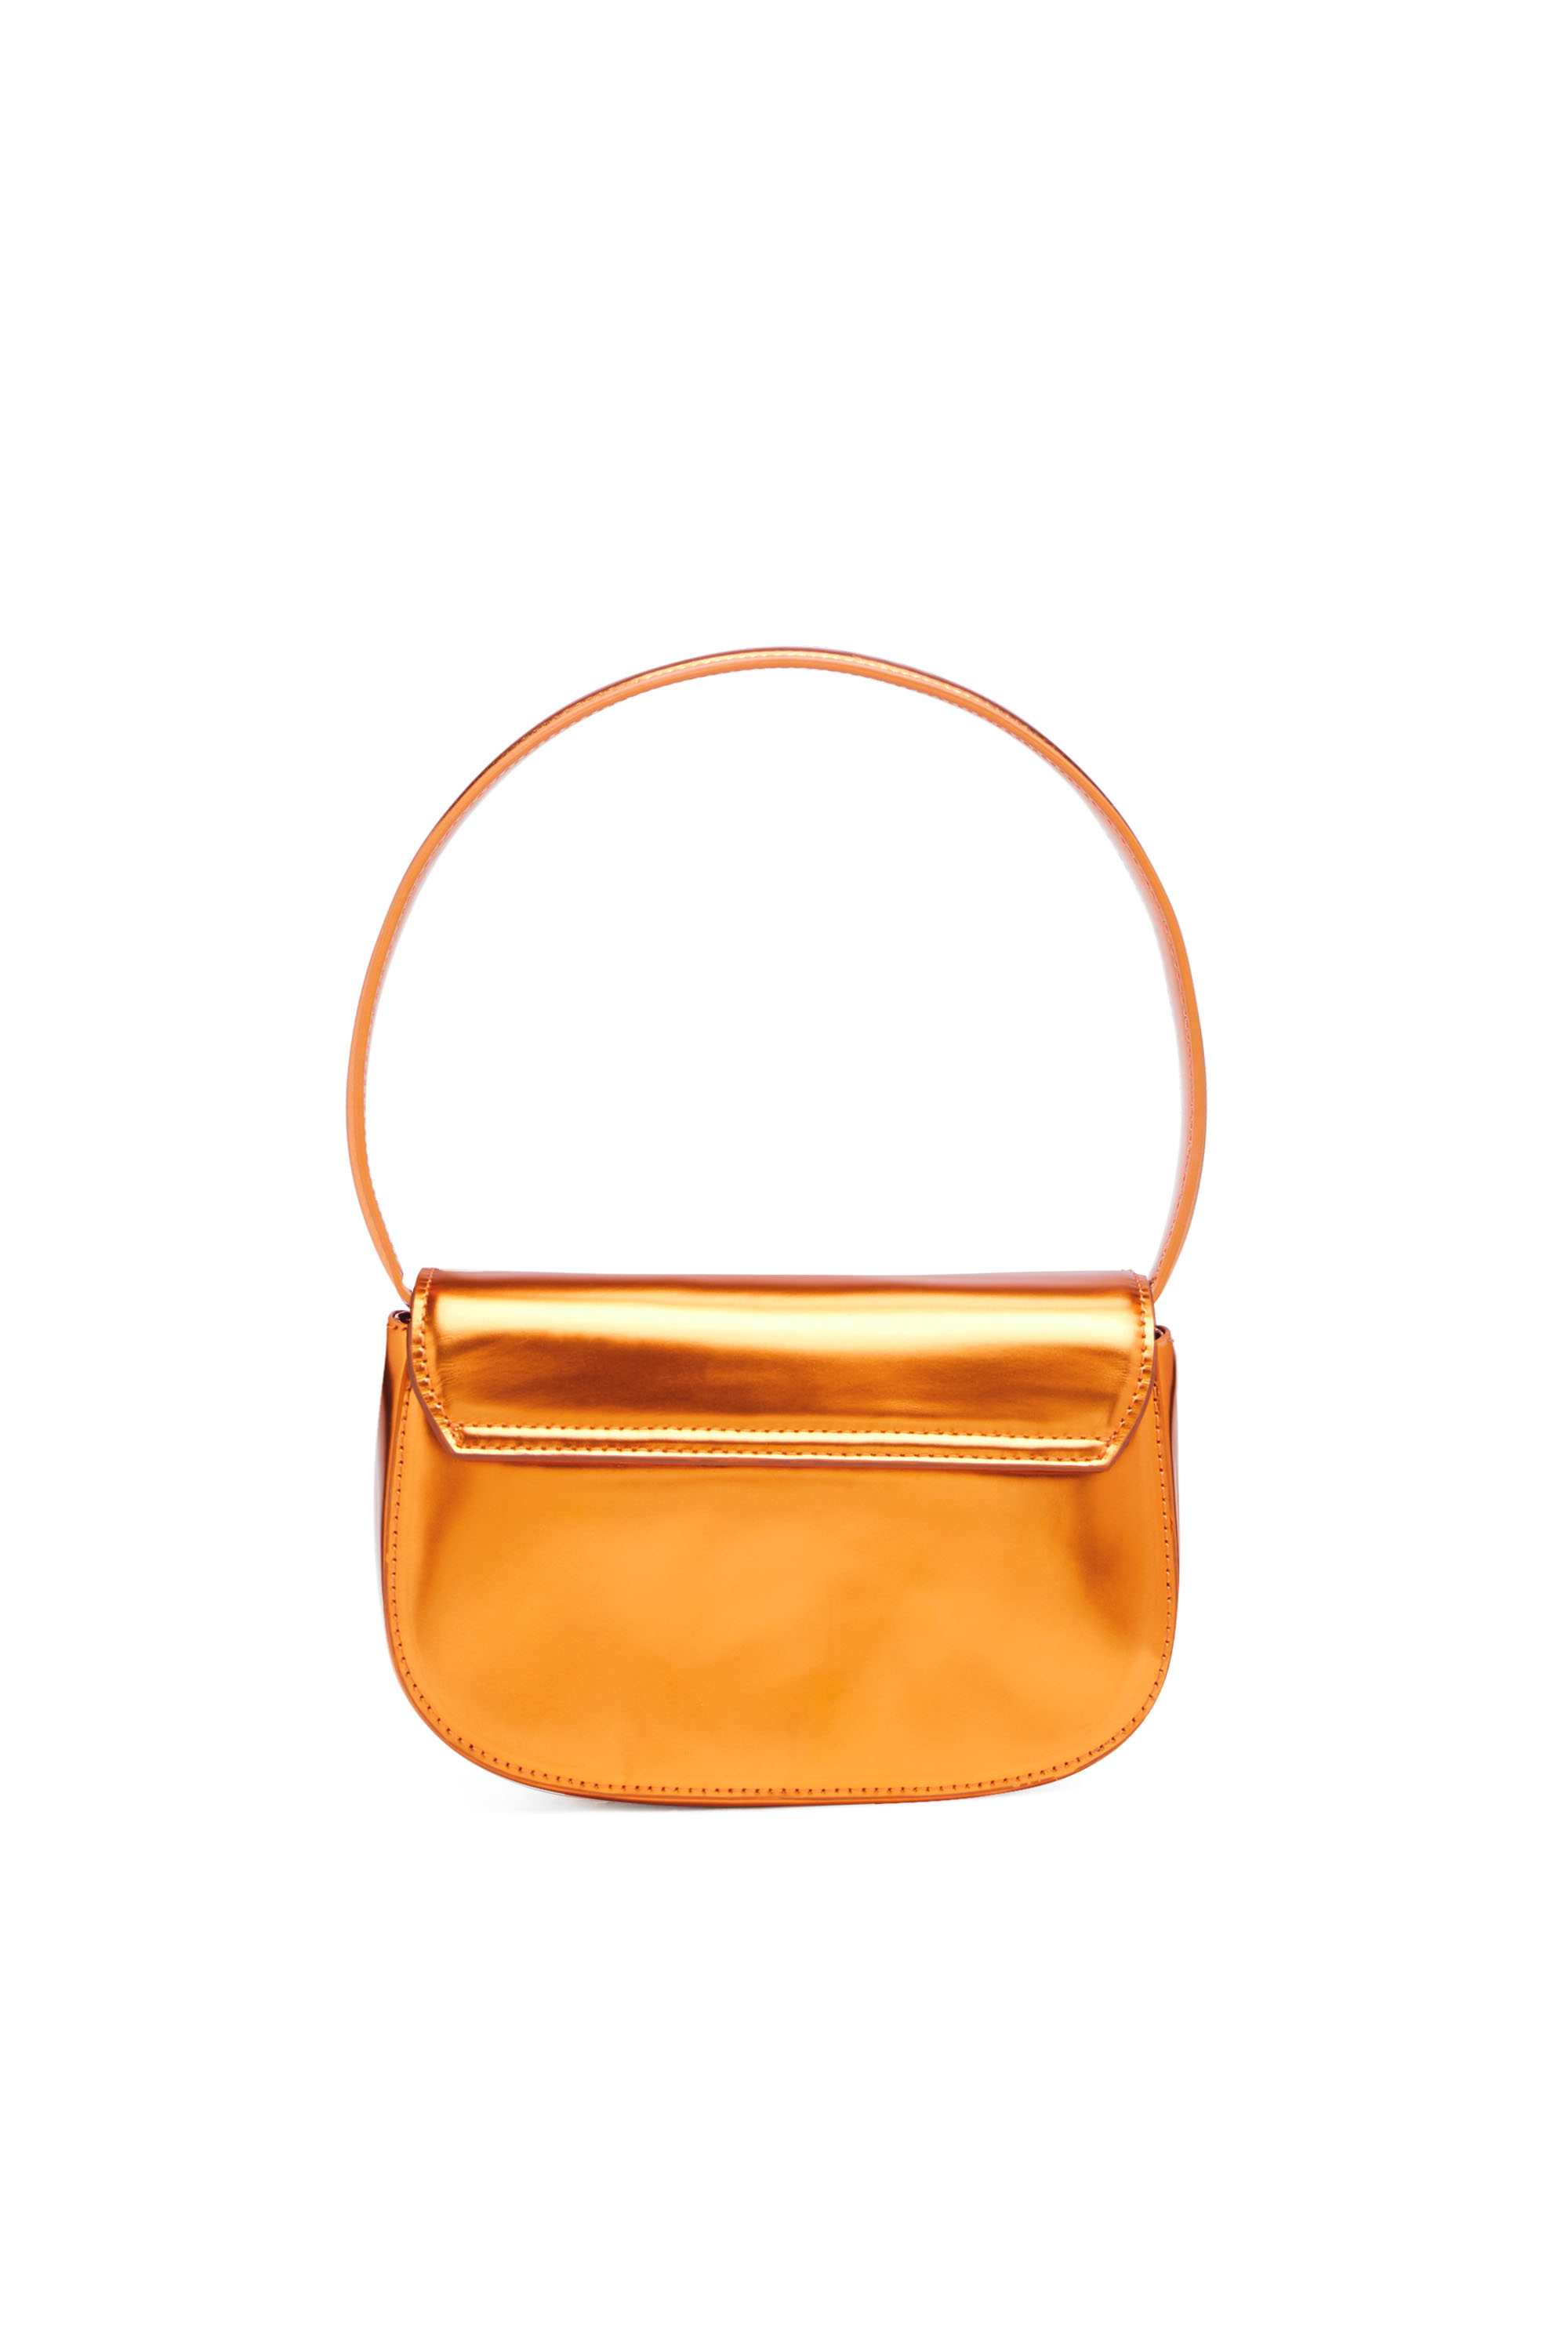 Women's New Arrivals Accessories Bags, Belts, Wallets | Diesel®